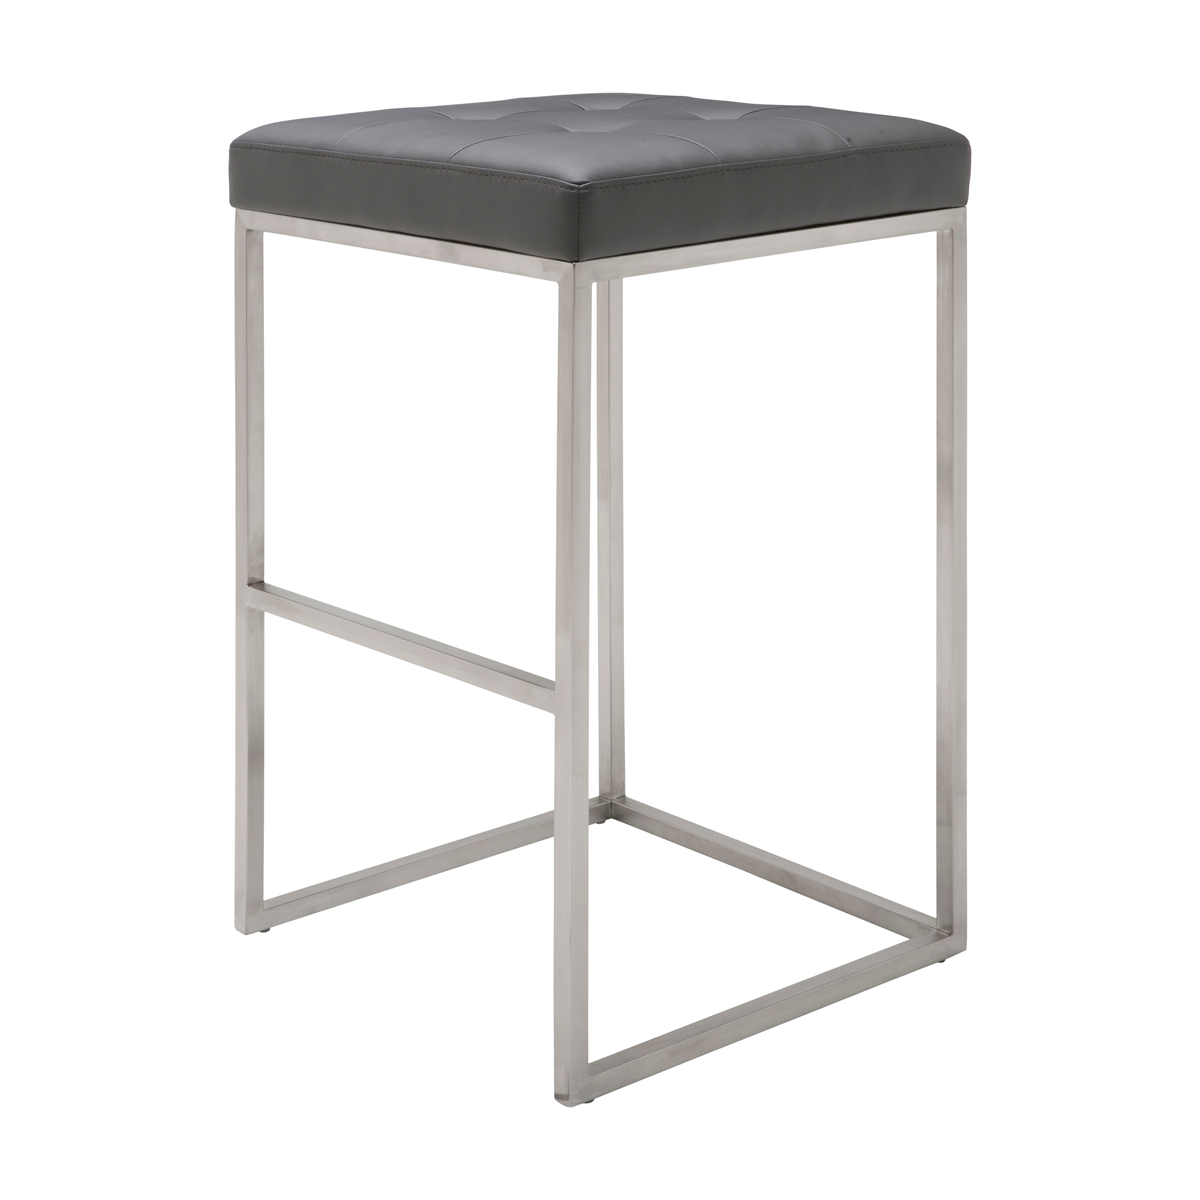 Metal square bar stools